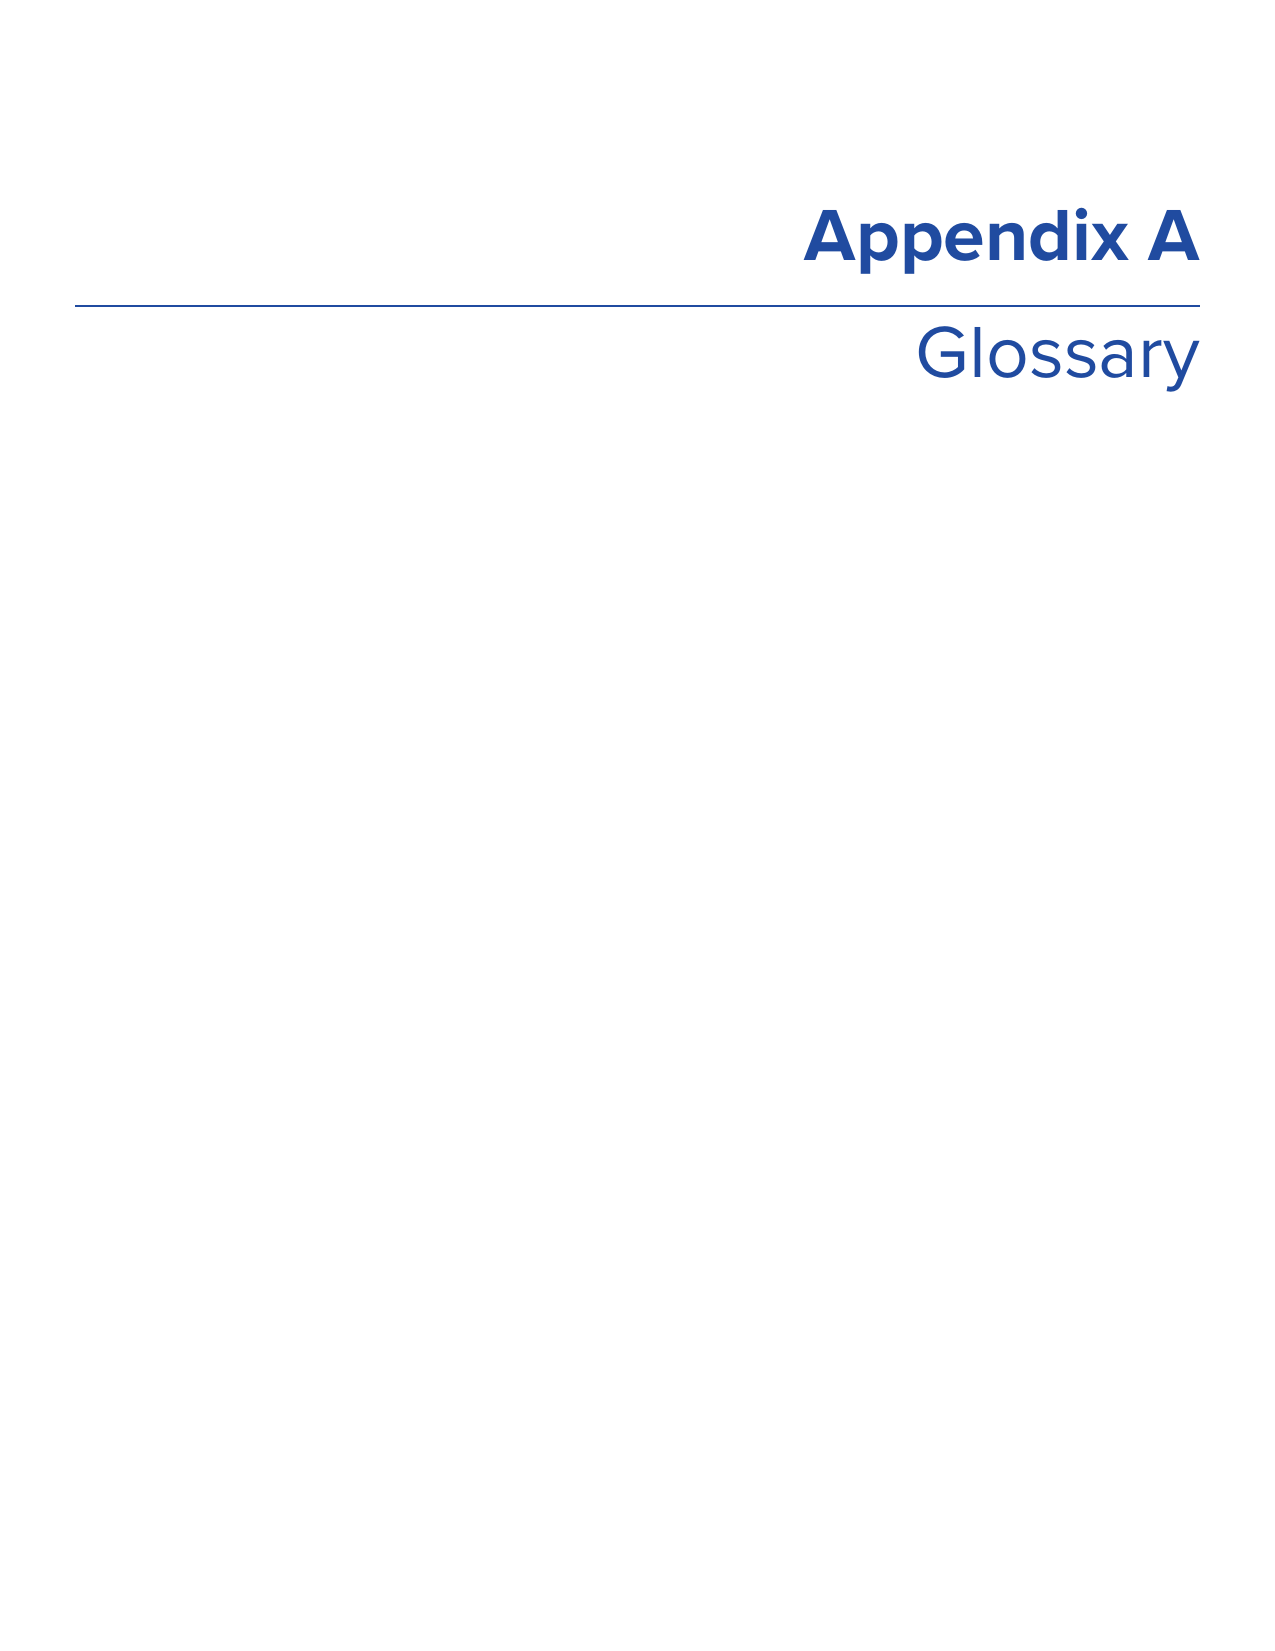 Appendix AGlossary